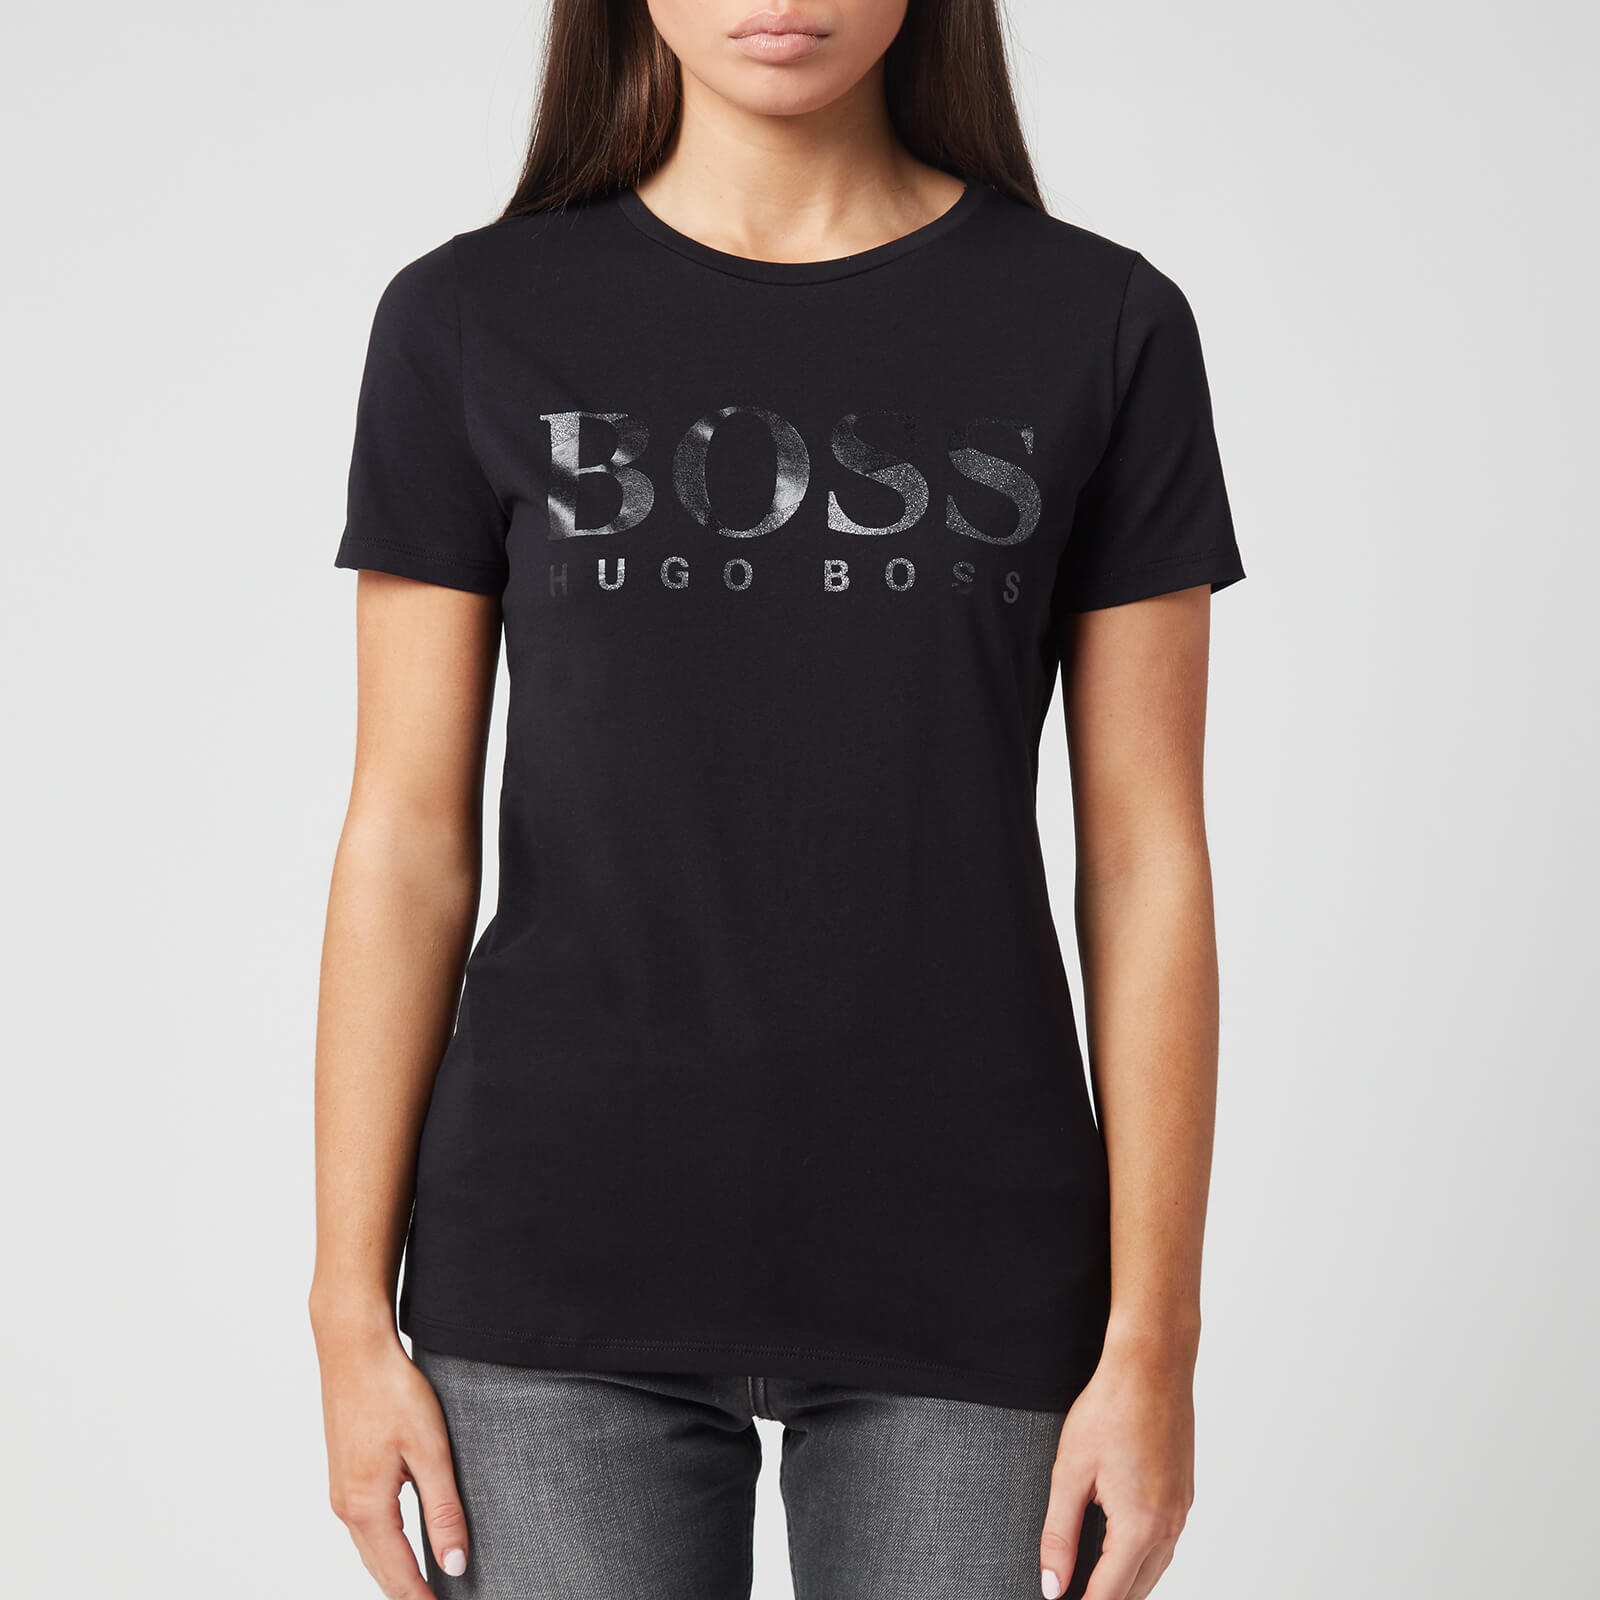 hugo boss ladies shirts